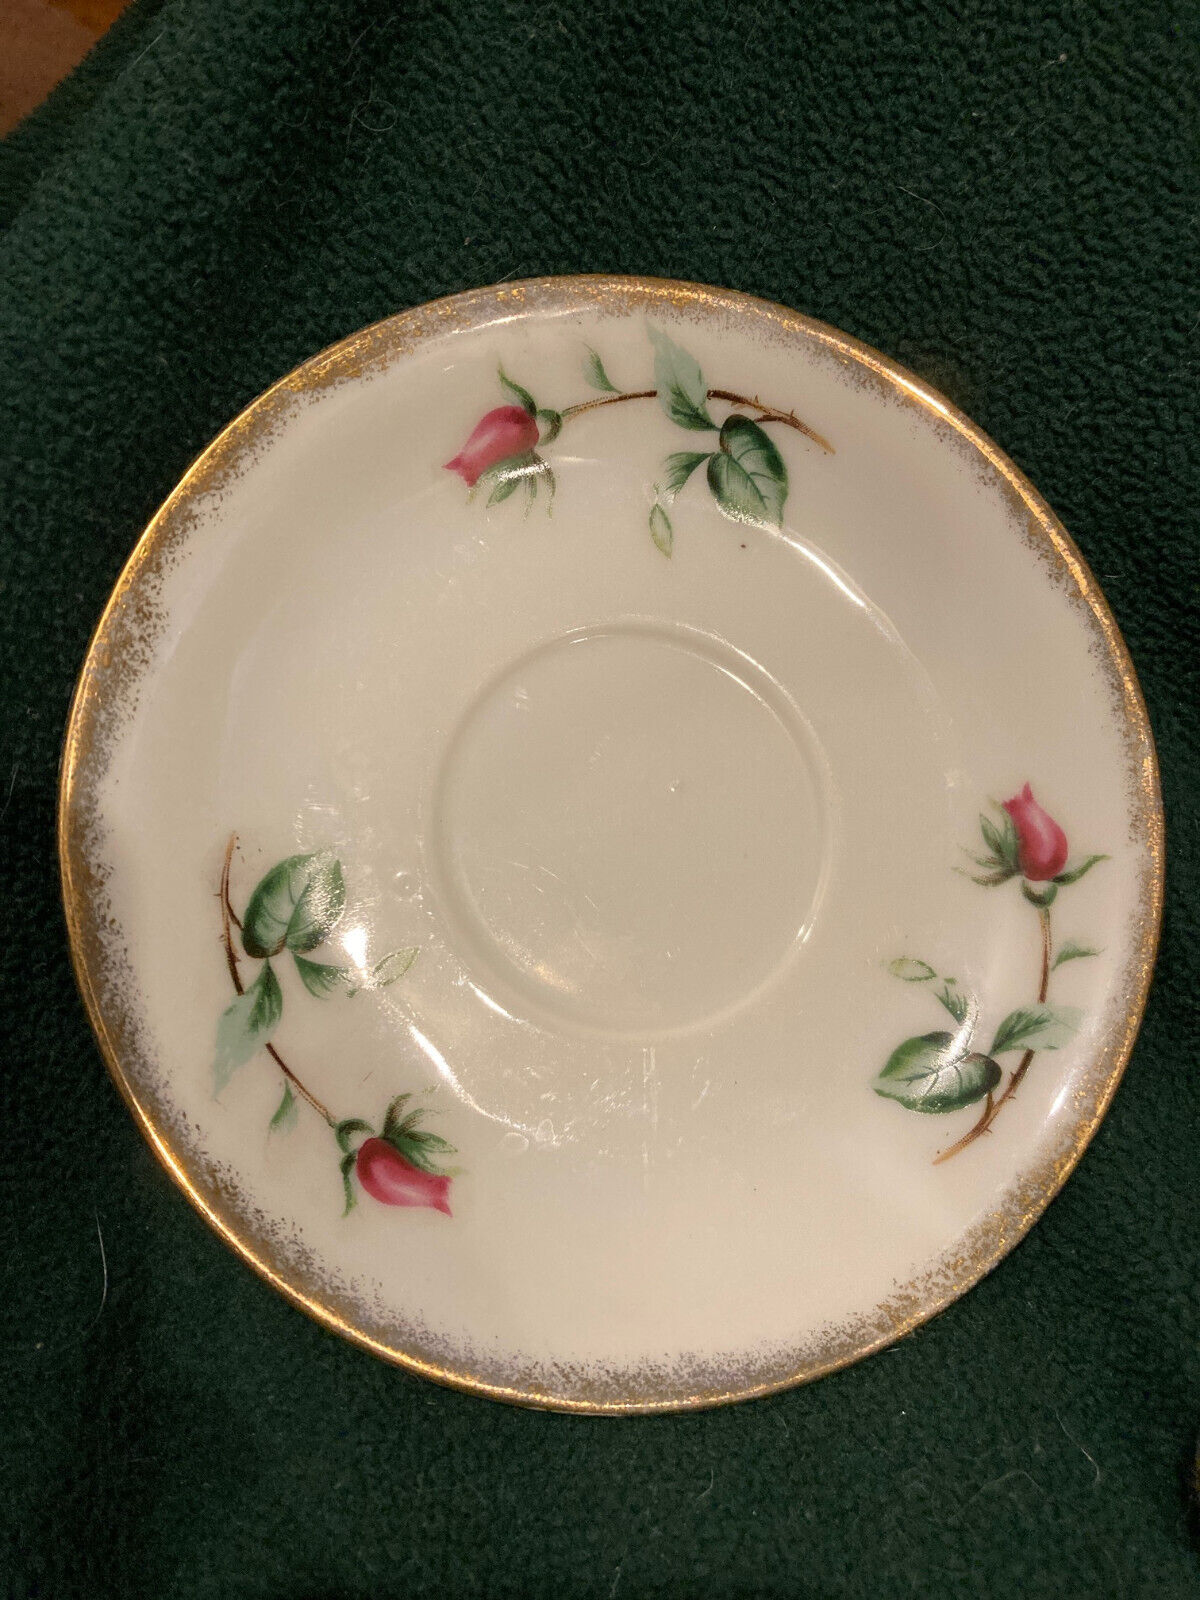 Vintage Tea Cup Saucer Plate Gold Rim Pink Rose with Green Leaf EUC